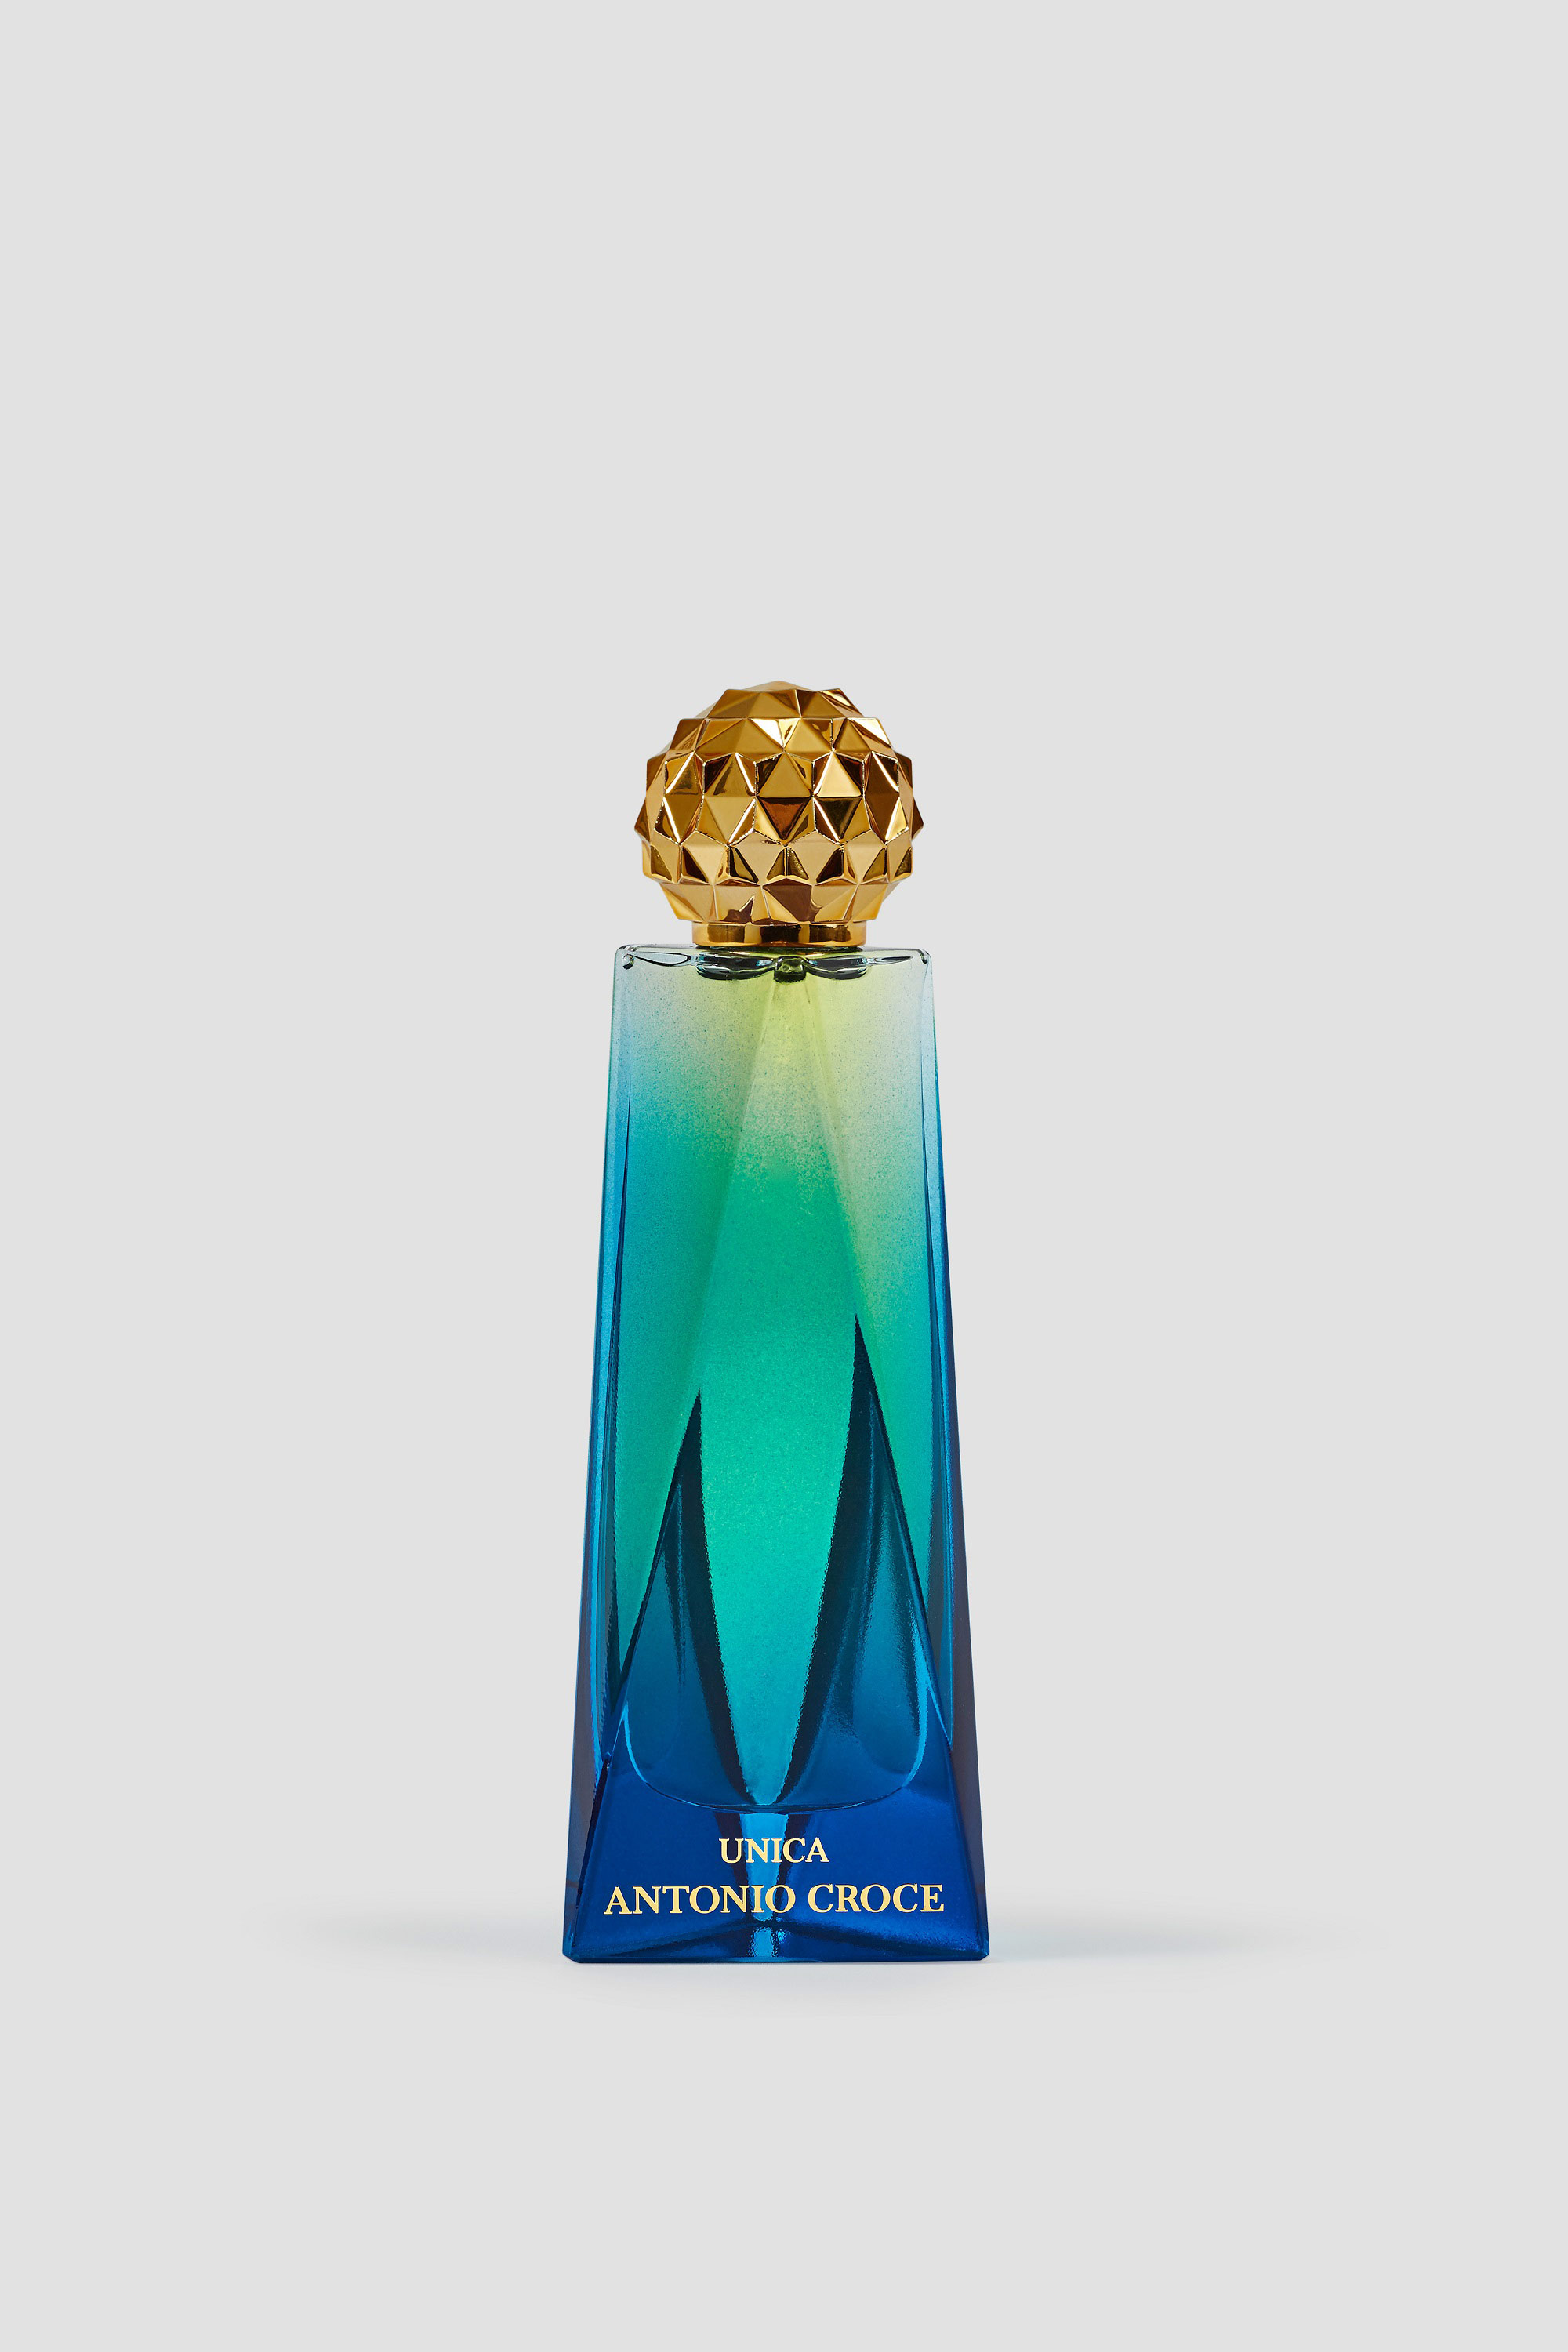 Unica Antonio Croce perfume - a fragrance for women 2017